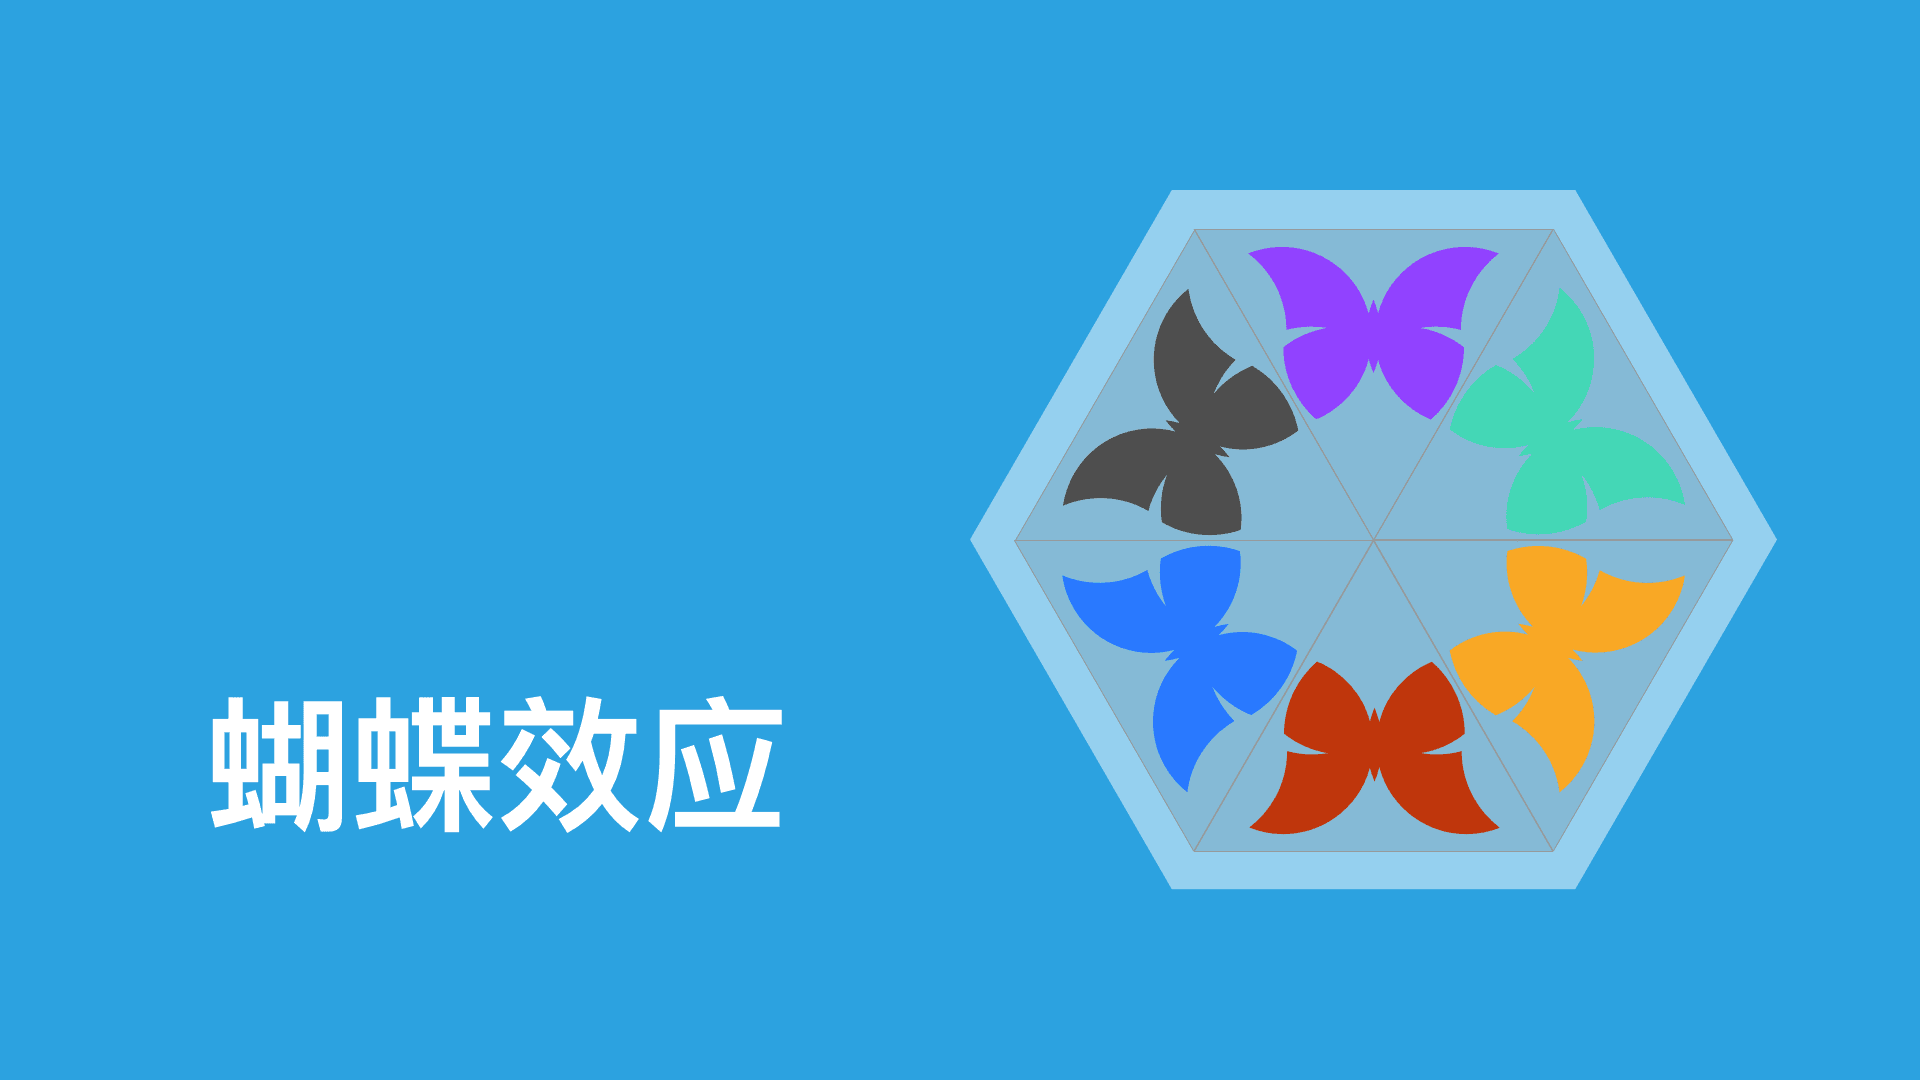 Banner of 蝴蝶效應 1.0